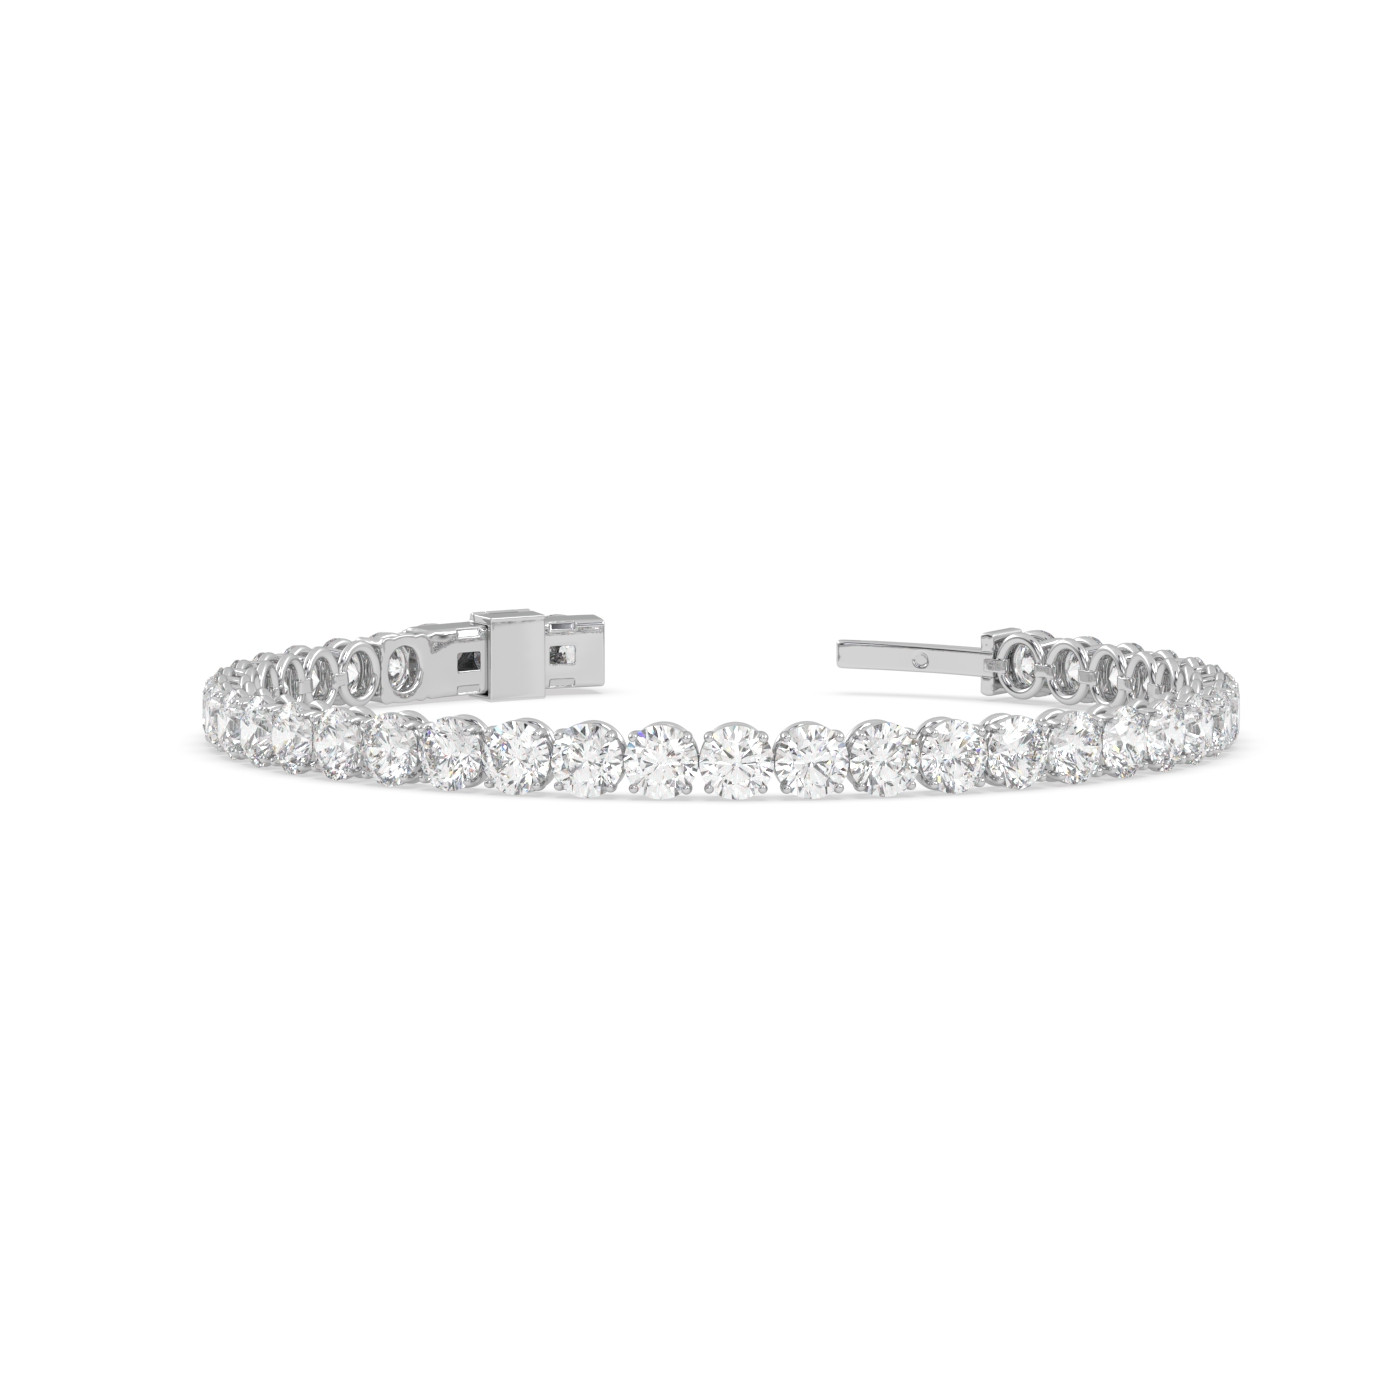 18k white gold 13 carat round diamond tennis bracelet with modern american lock system